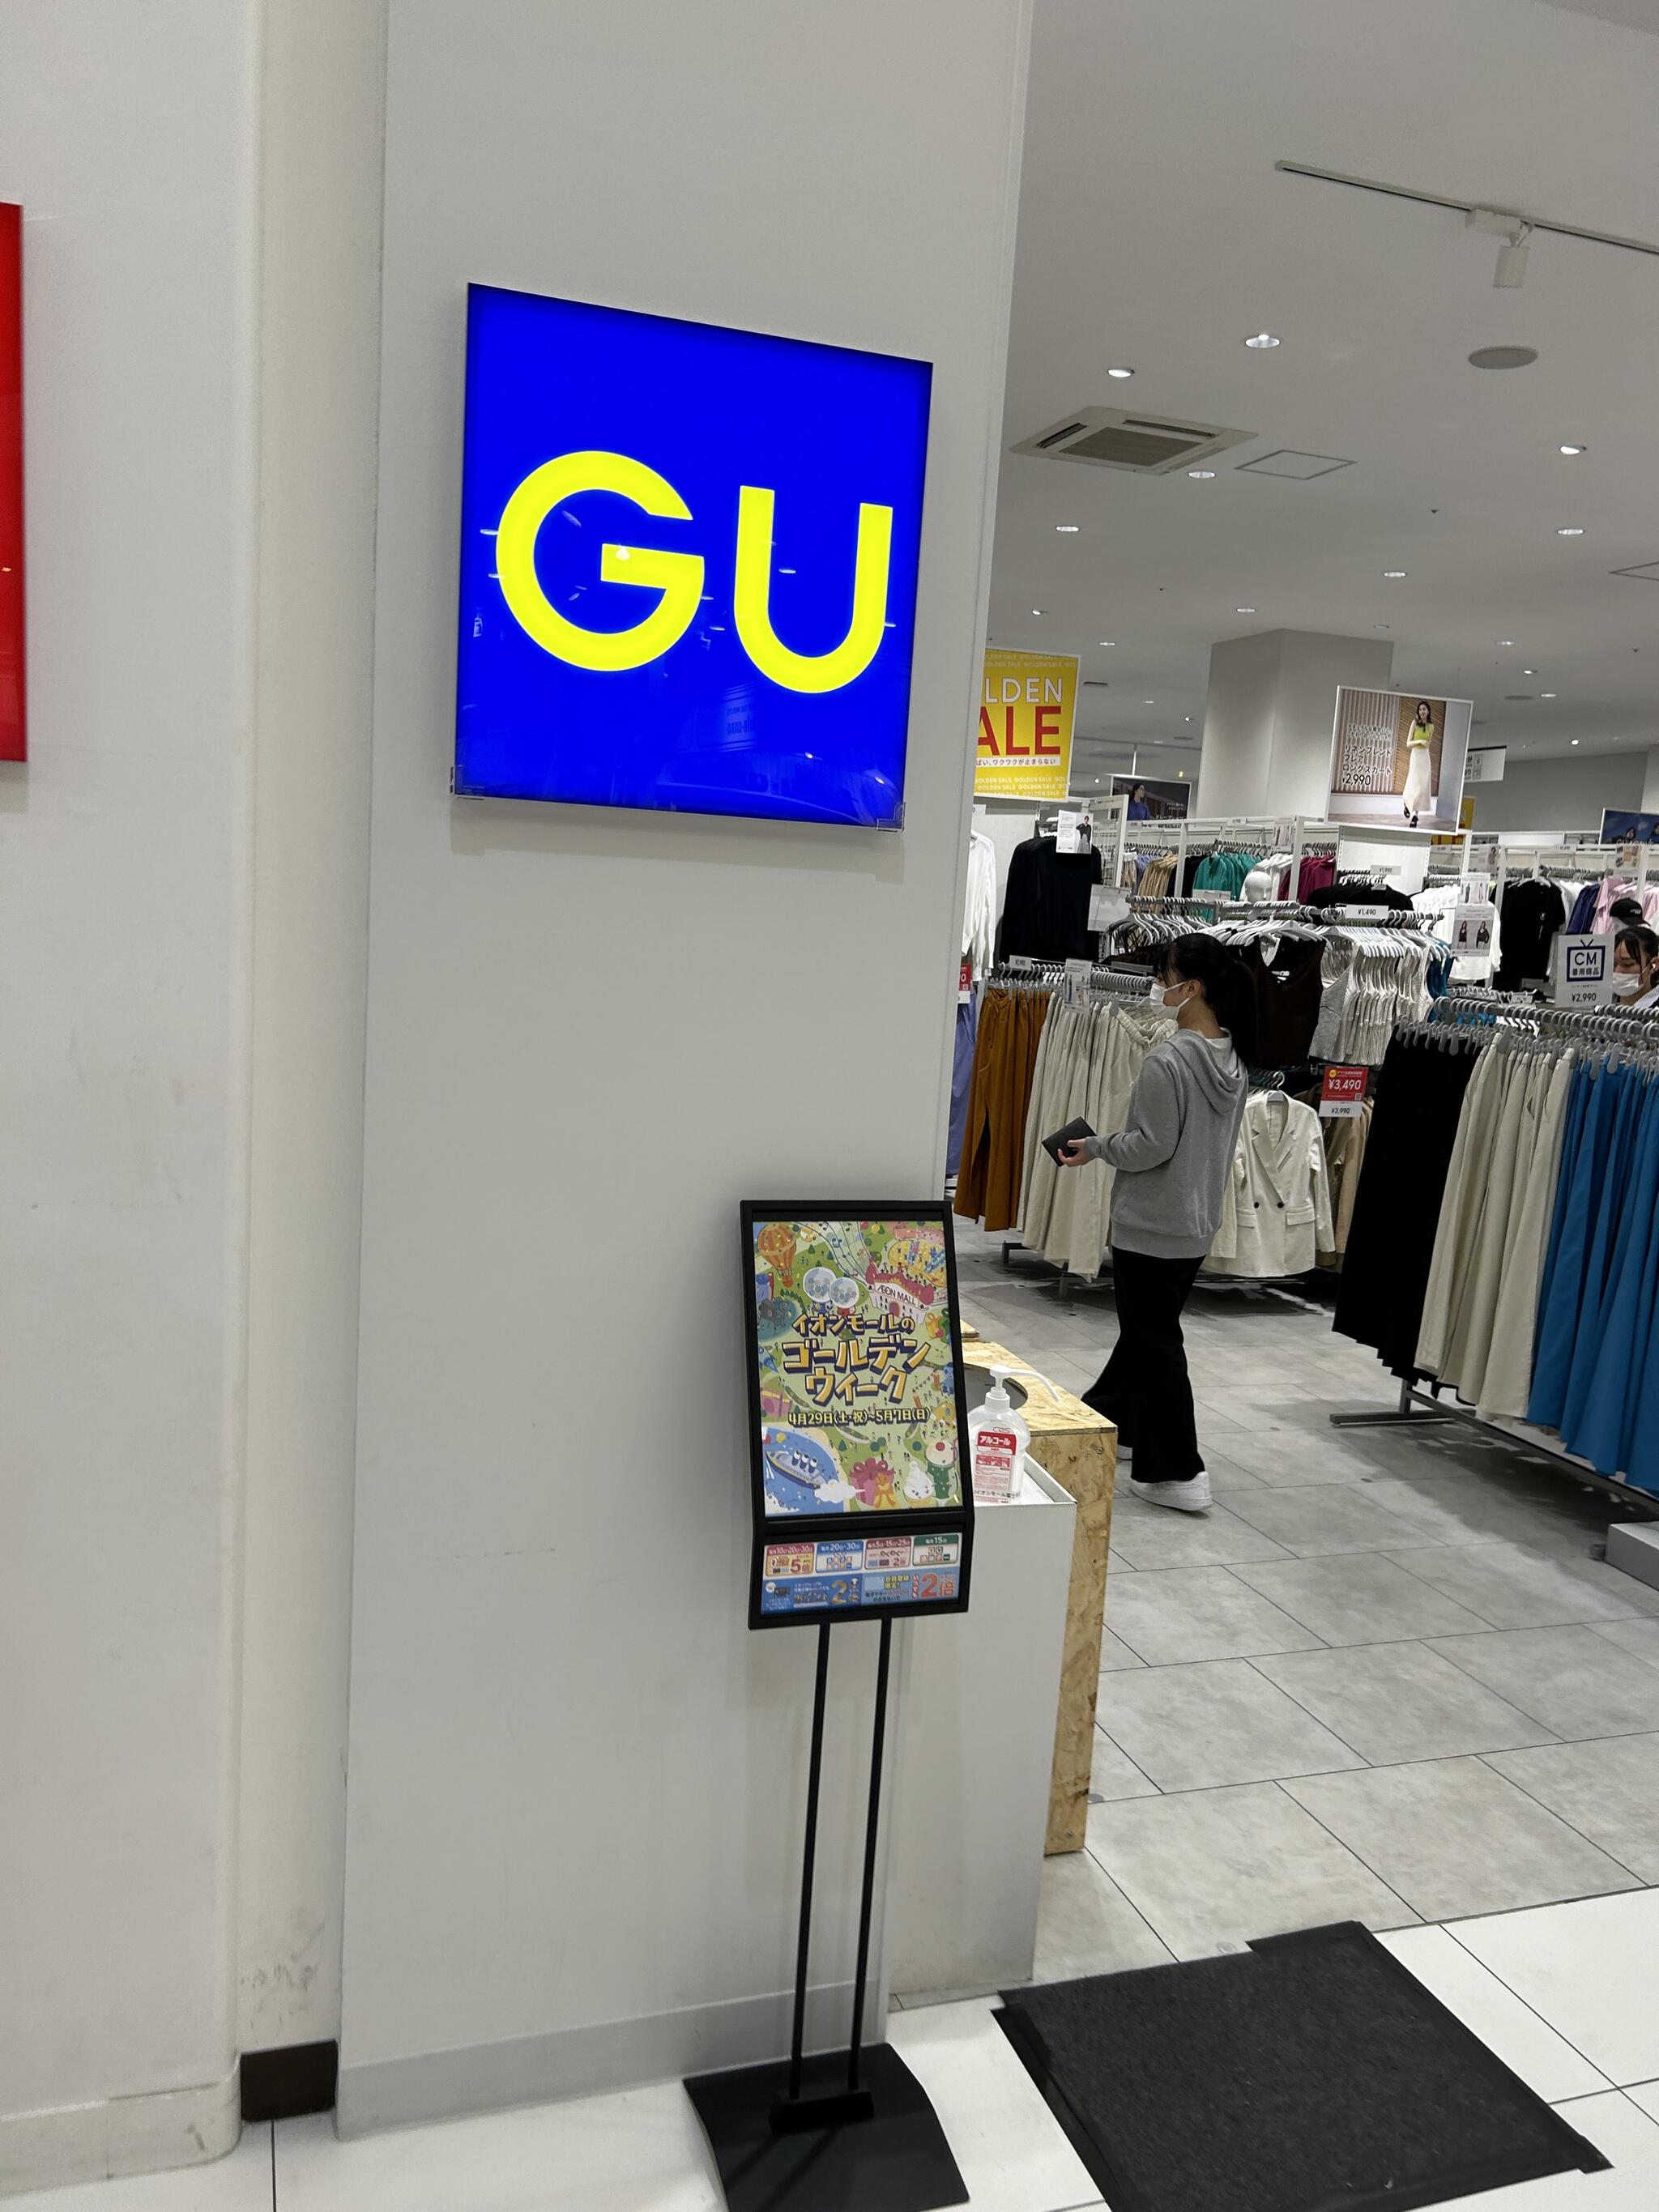 GU イオンモール富士宮店の代表写真1